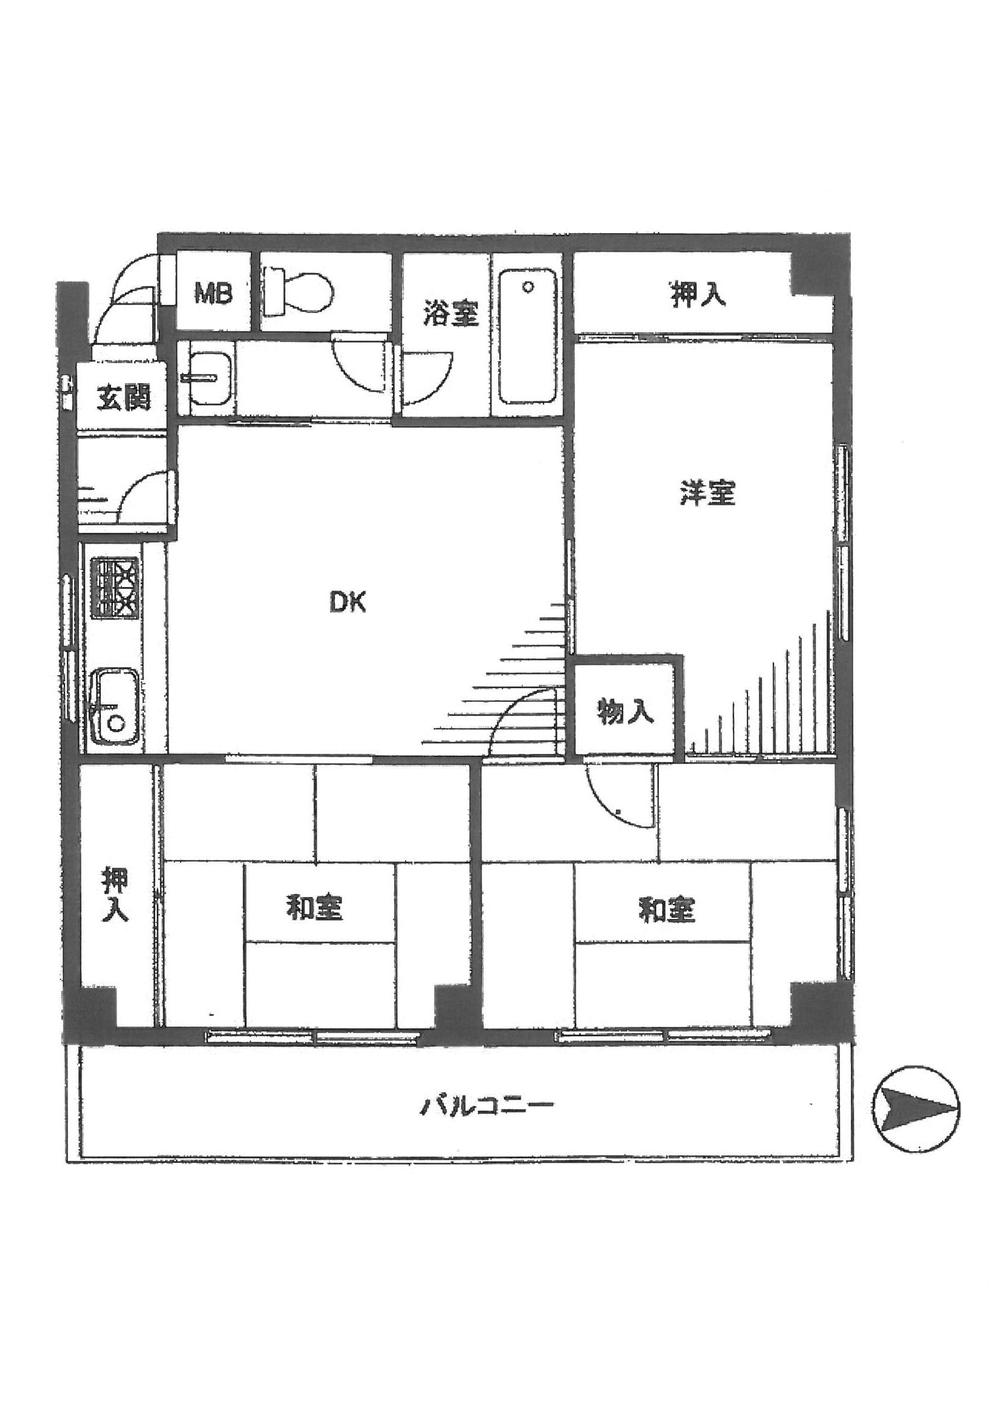 Floor plan. 3DK, Price 16.3 million yen, Footprint 58.8 sq m , Balcony area 8 sq m